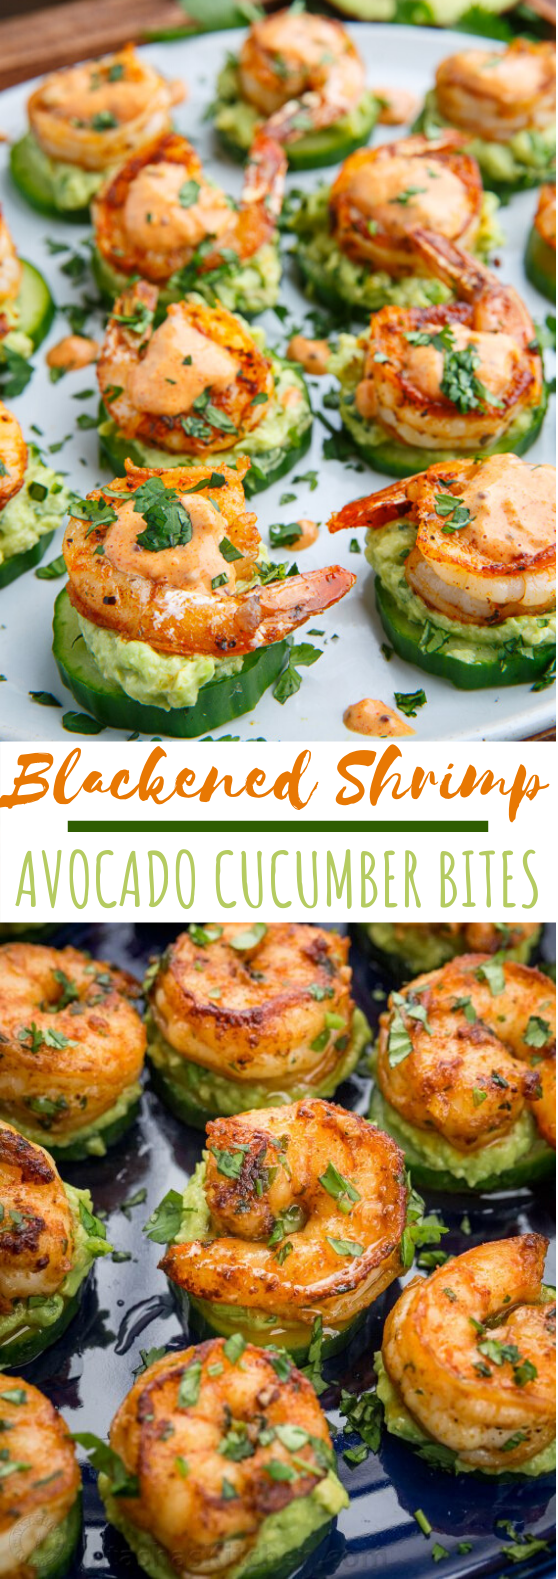 Blackened Shrimp Avocado Cucumber Bites #healthy #keto #appetizers #lowcarb #glutenfree